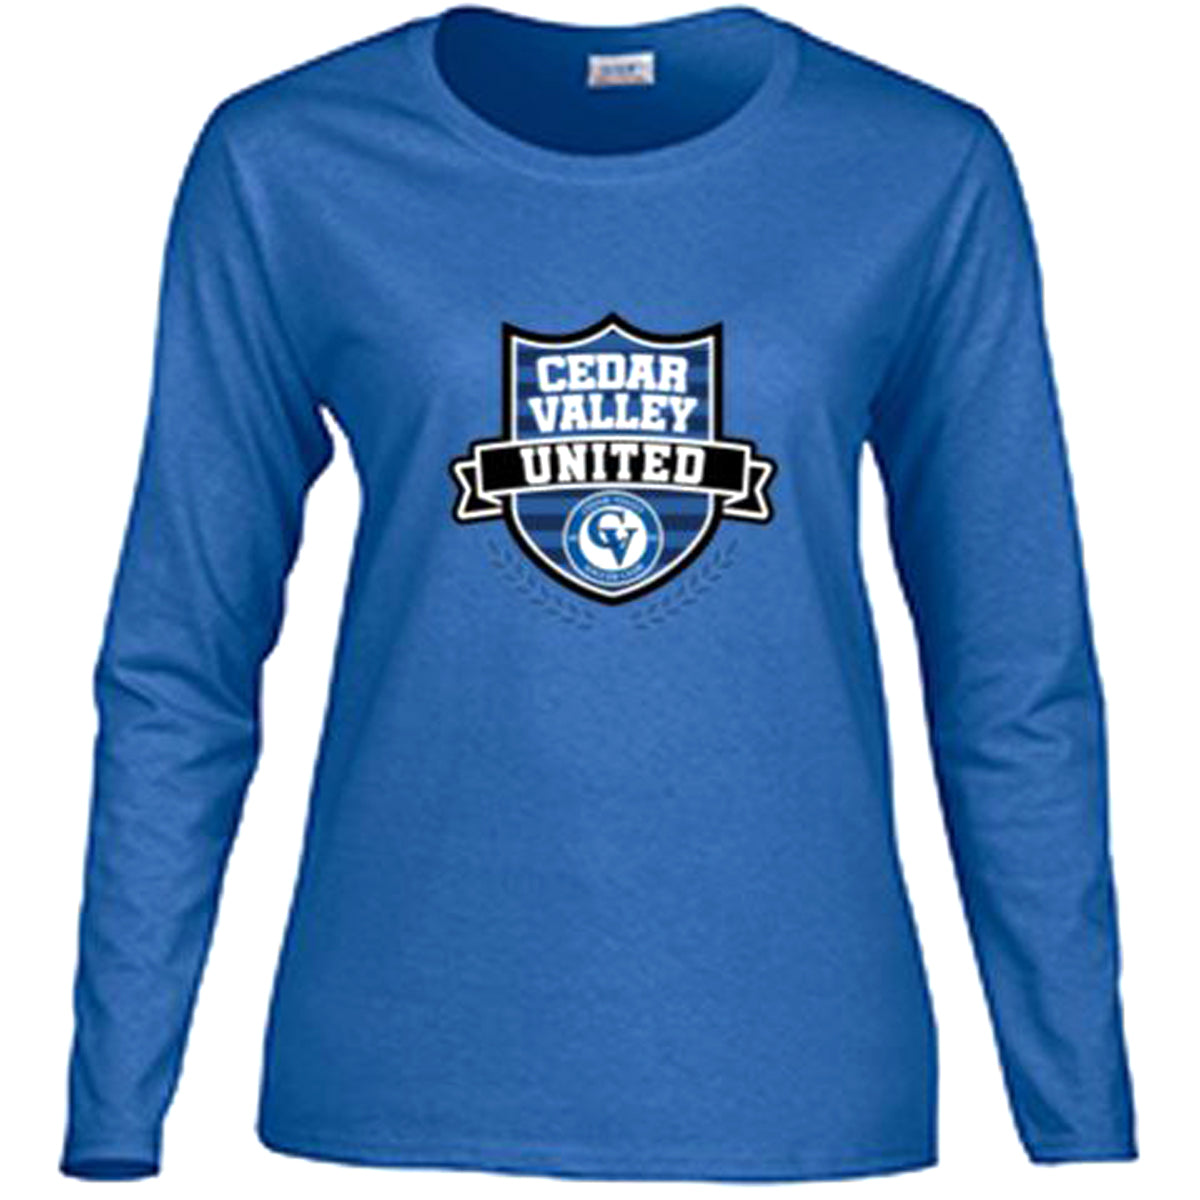 Cedar Valley Soccer Club Ladies' Heavy Cotton 5.3 Oz. Long-Sleeve T-Shirt Long Sleeve T-Shirt Gildan Ladies Small Royal 